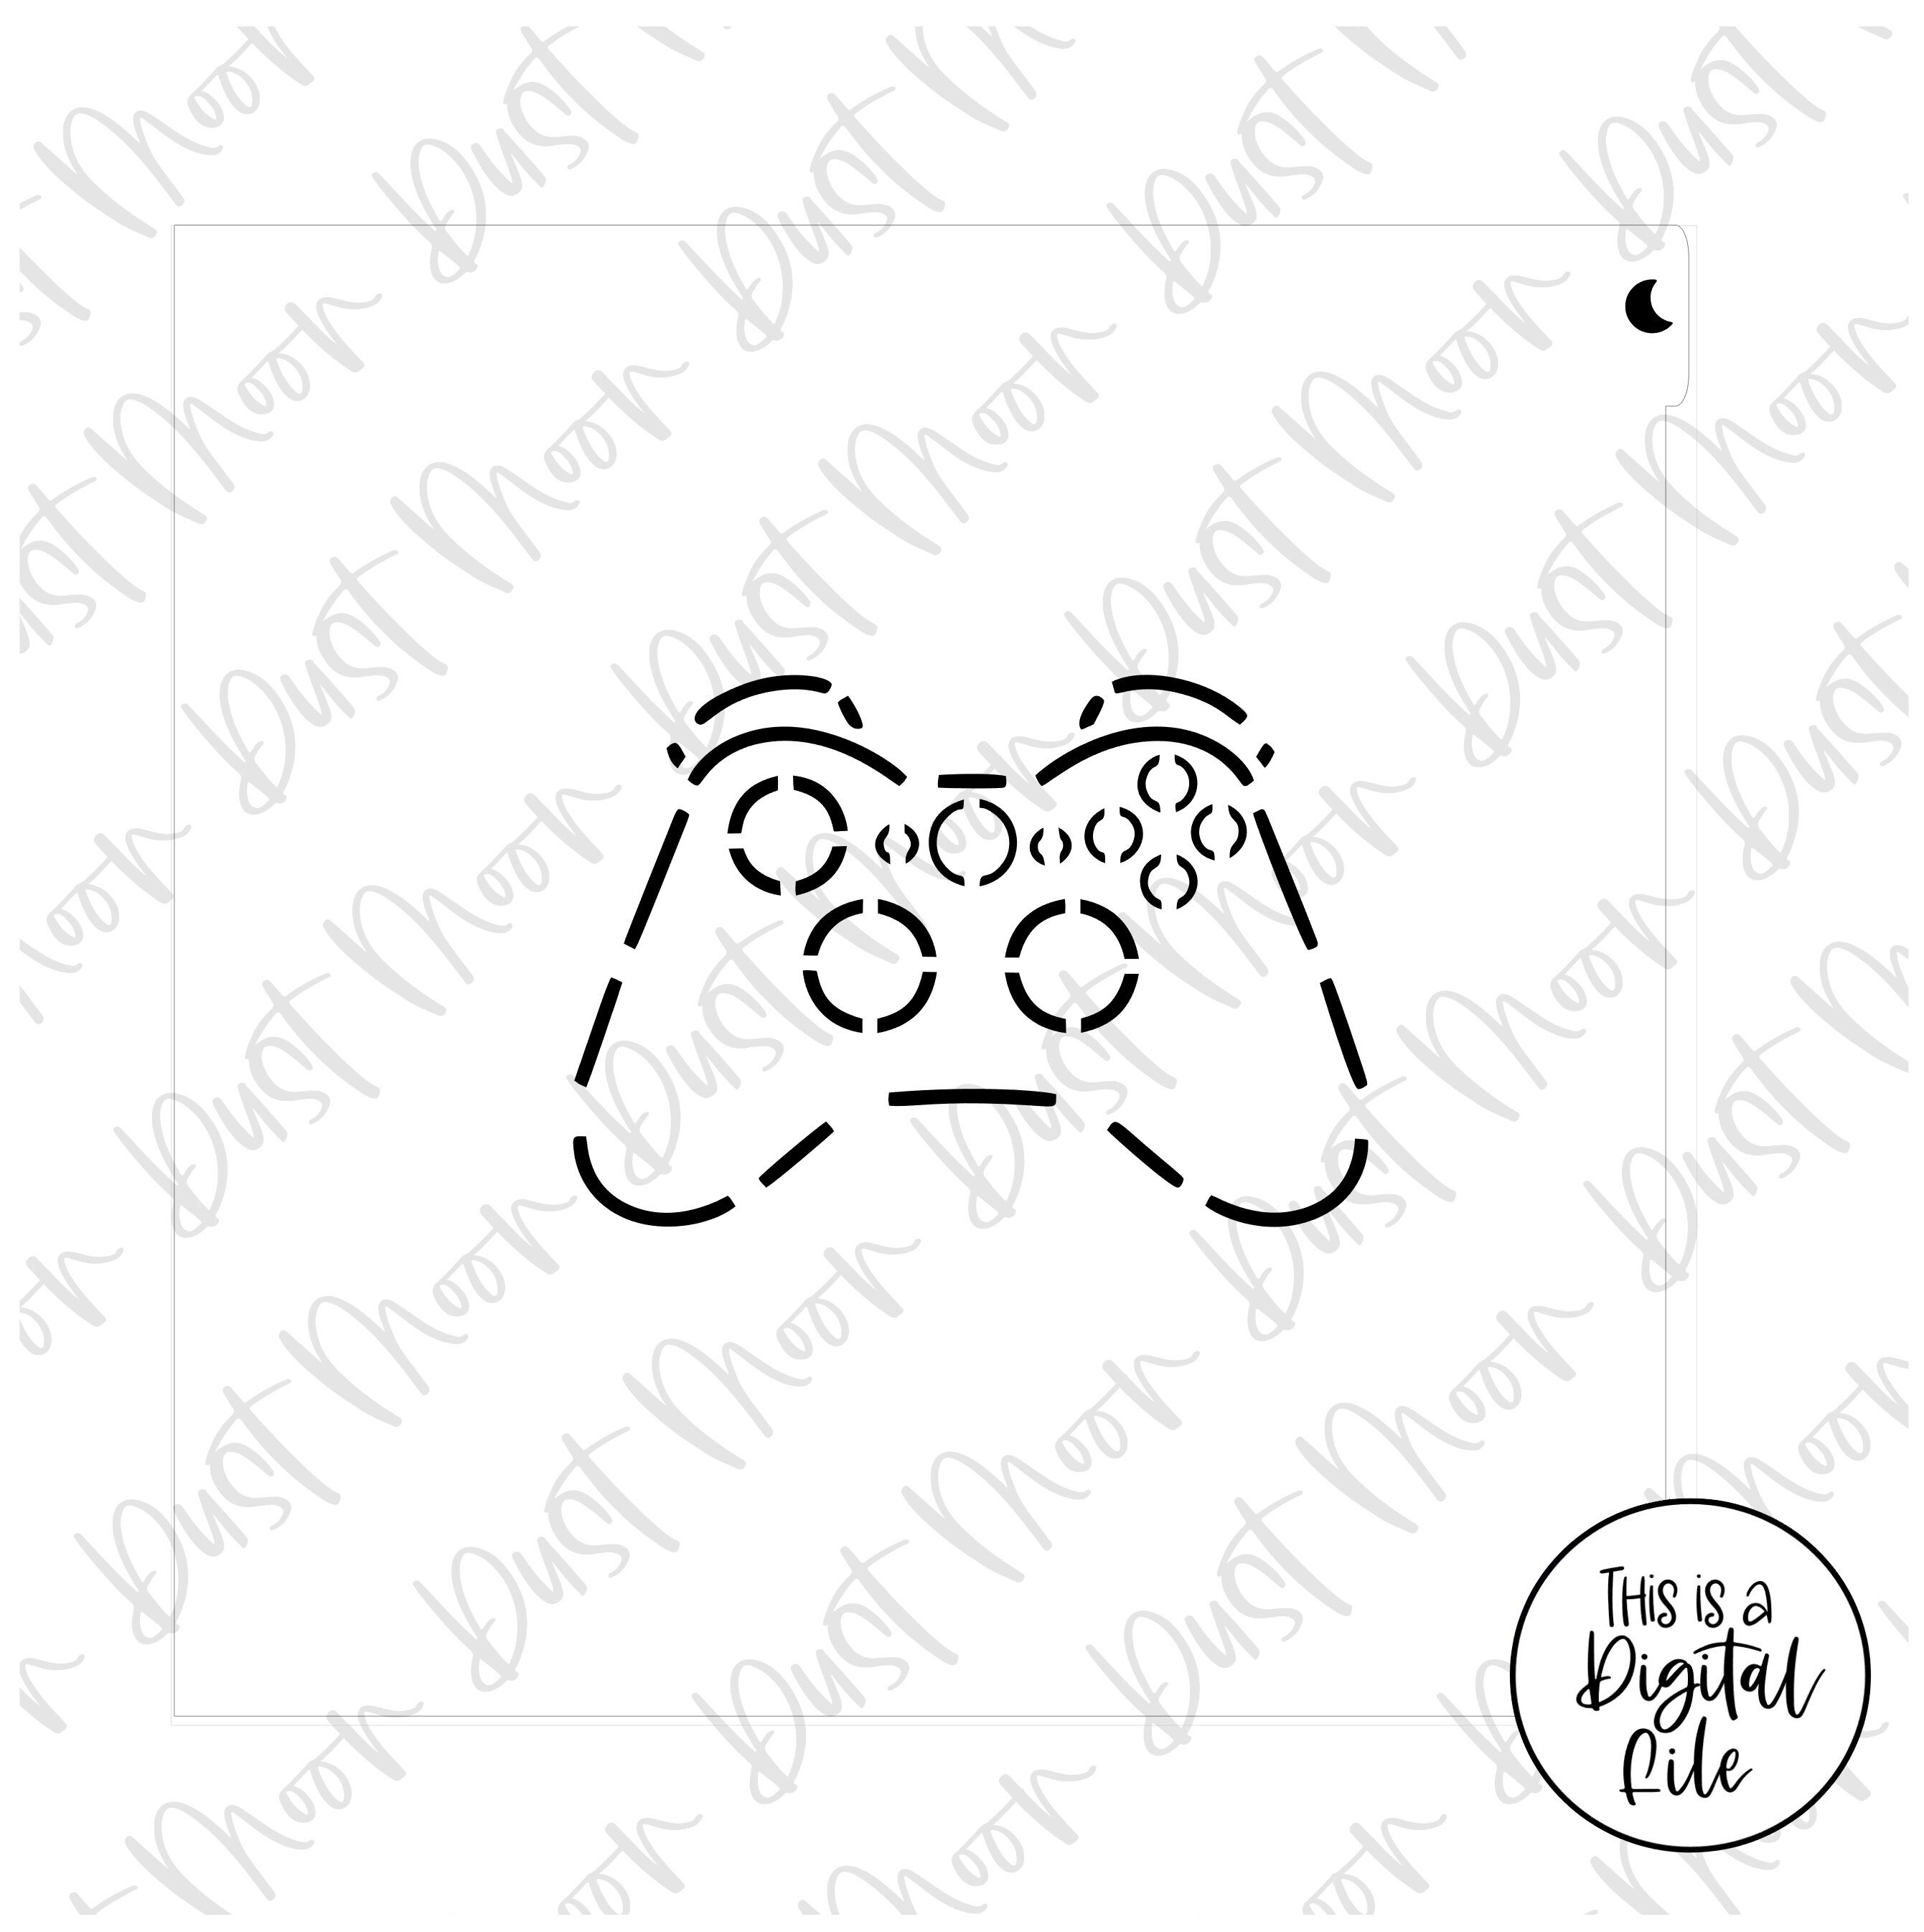 Gaming diecut sticker console controller pack 50 unique designs - modeS4u